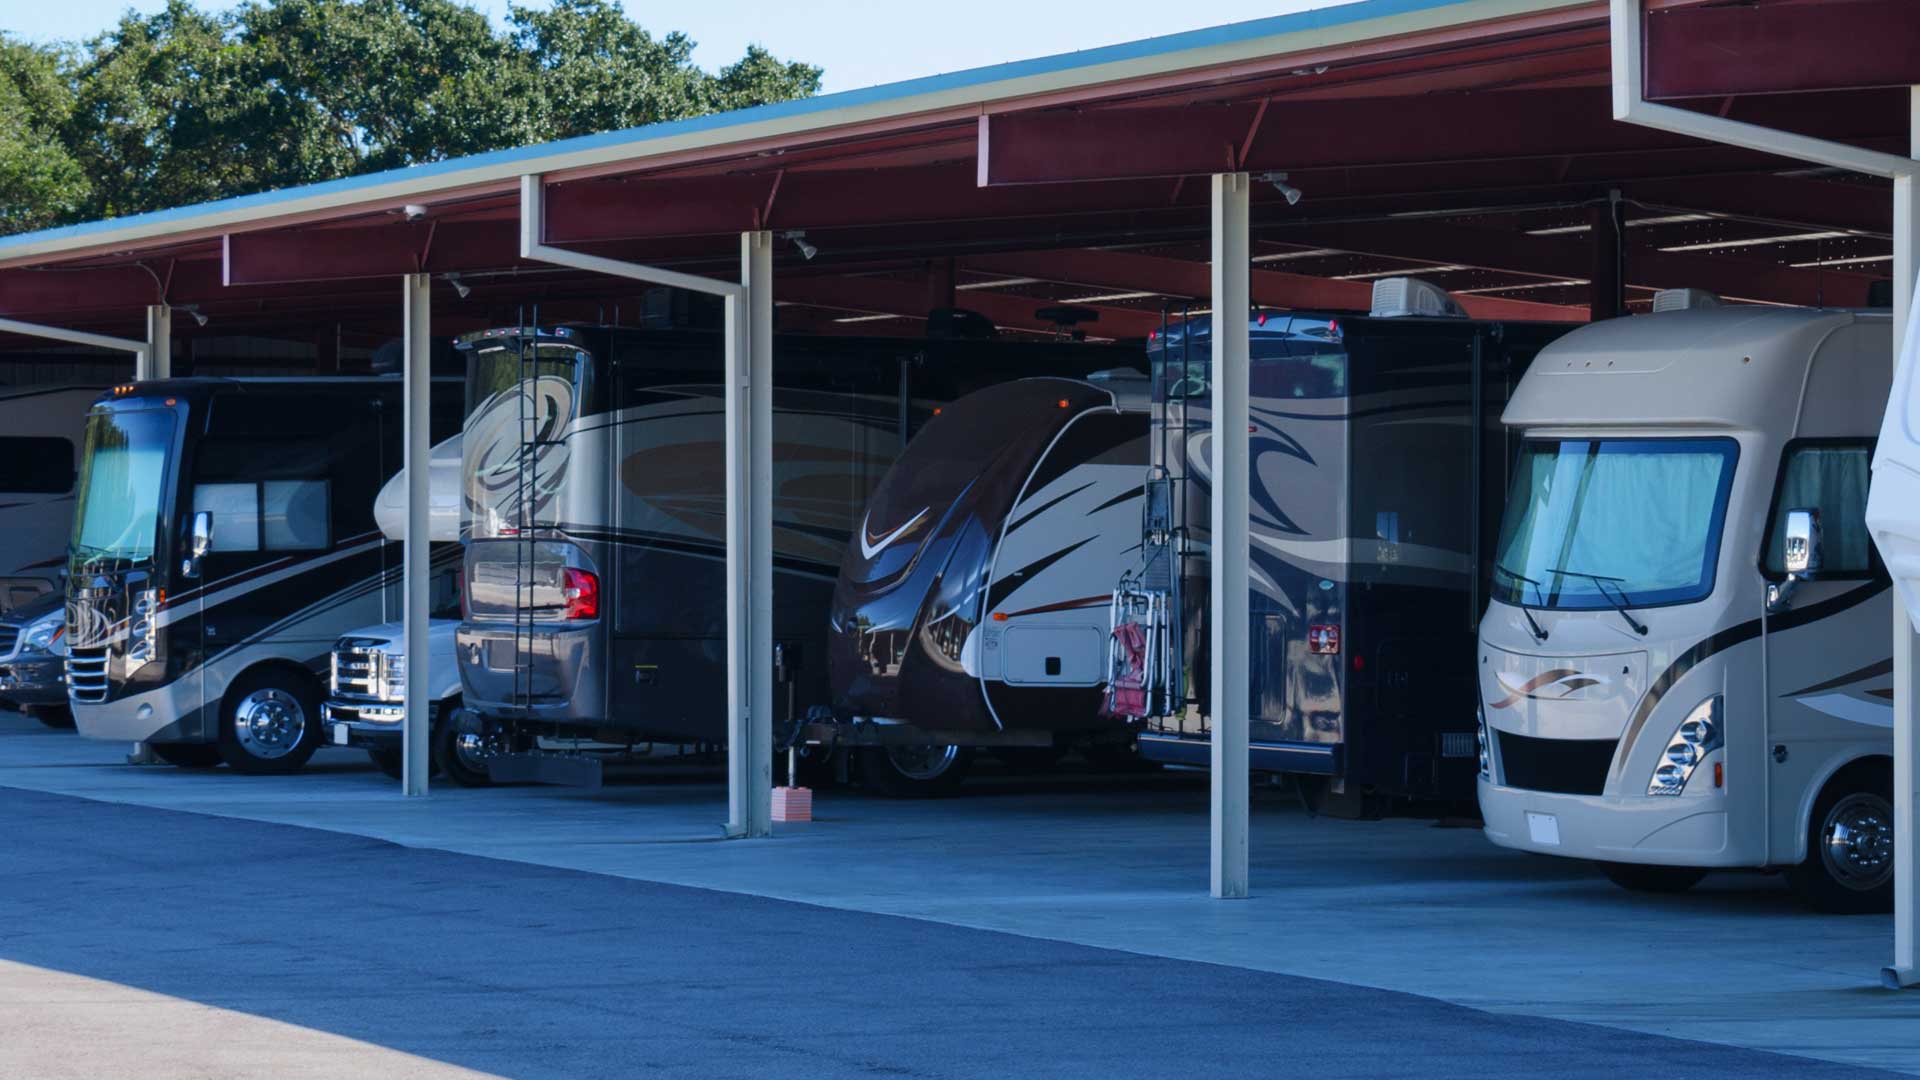 Parked RV's in storage in GA, NC.